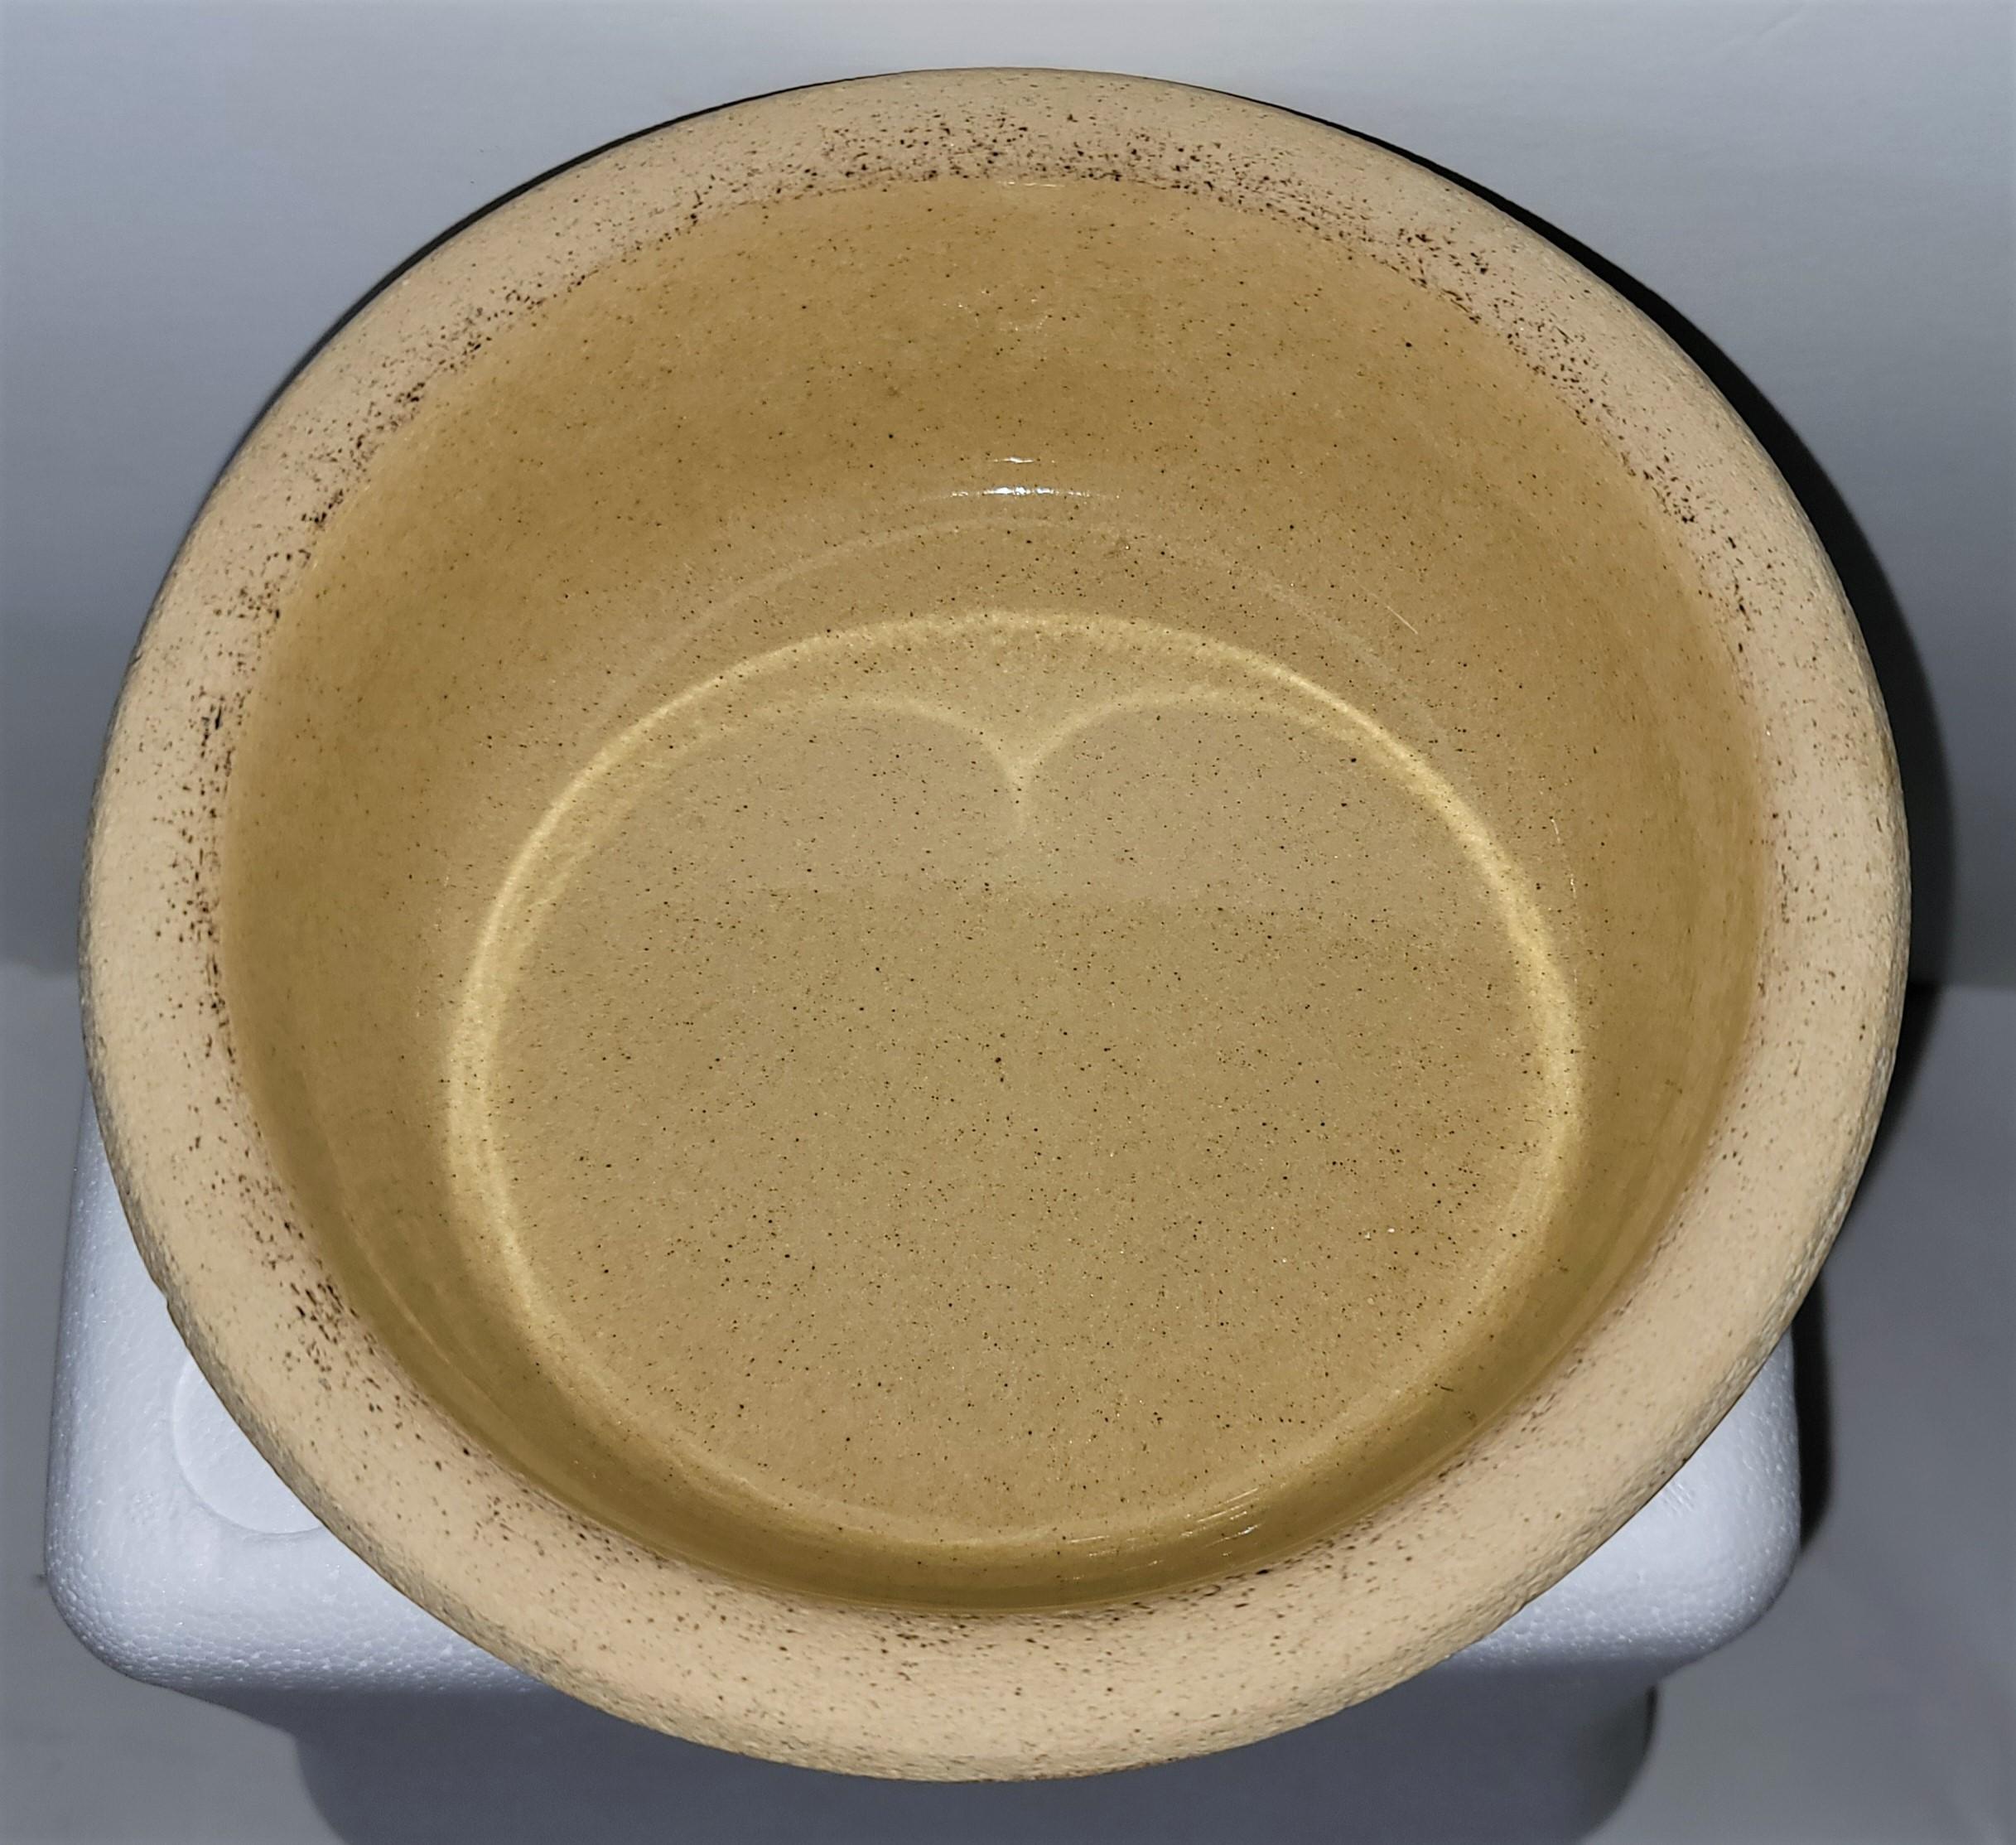 roseville pottery dog bowl